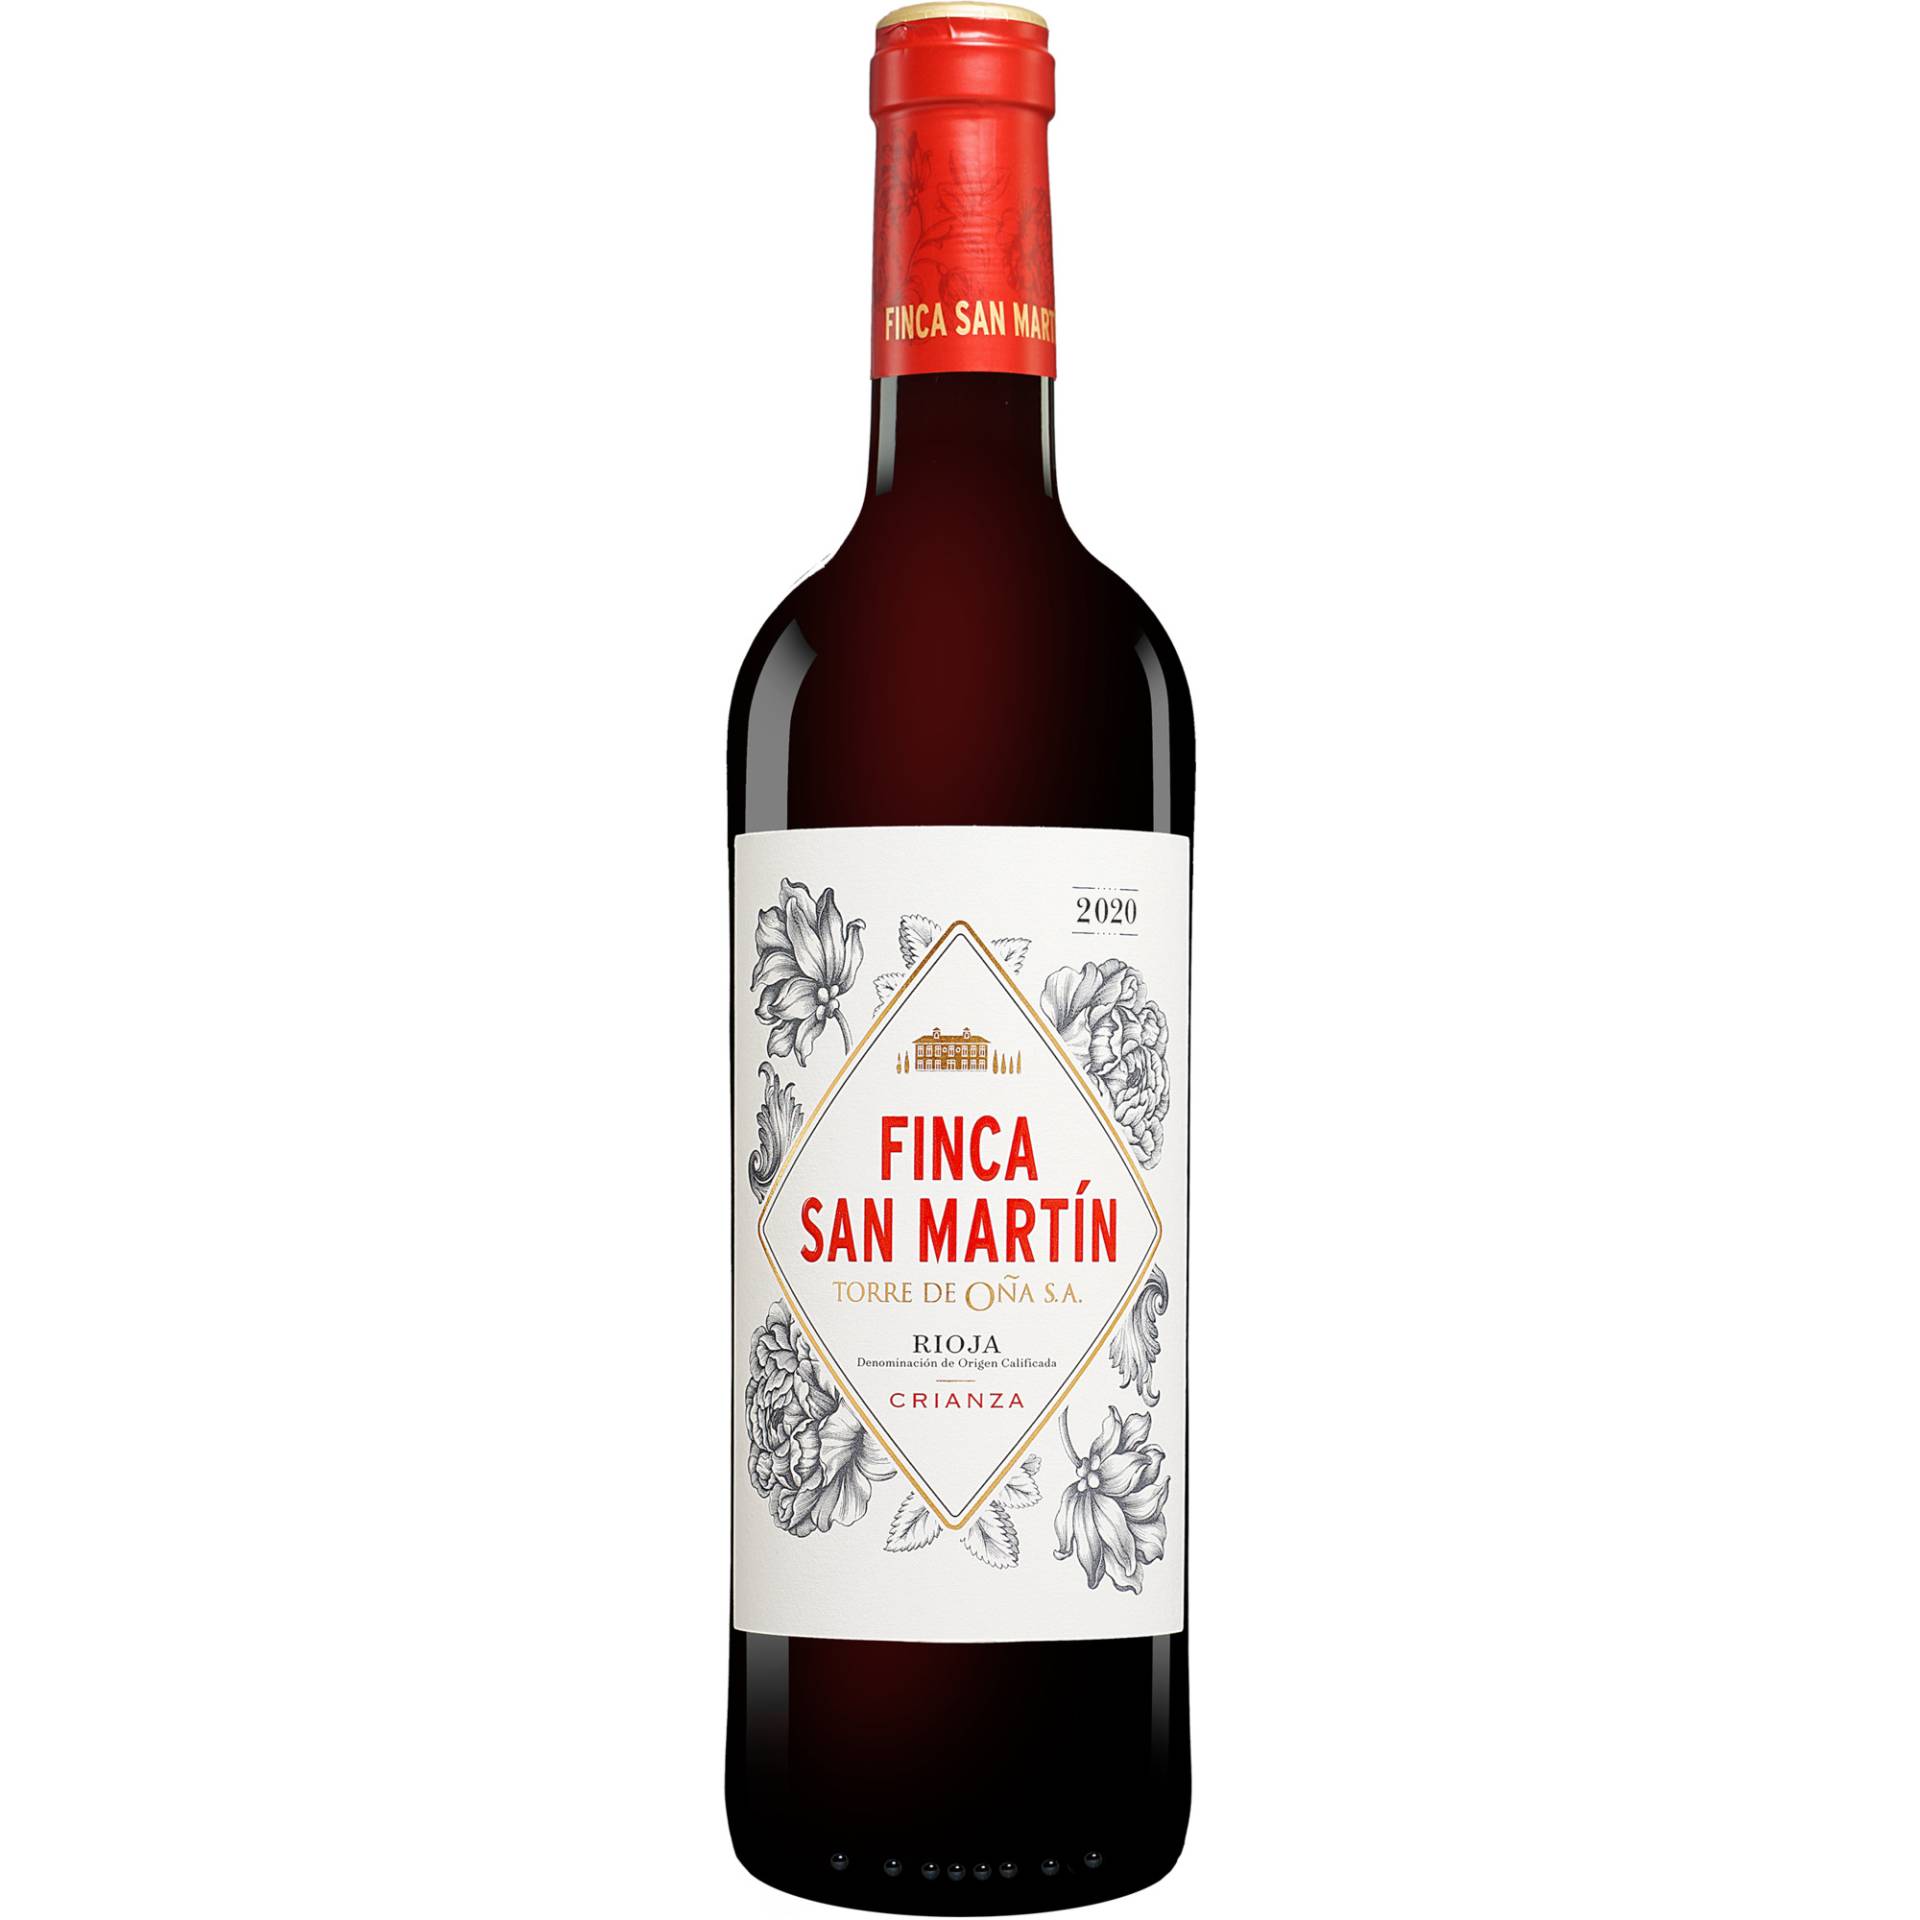 La Rioja Alta »Finca San Martín« Crianza 2020  0.75L 14% Vol. Rotwein Trocken aus Spanien von La Rioja Alta